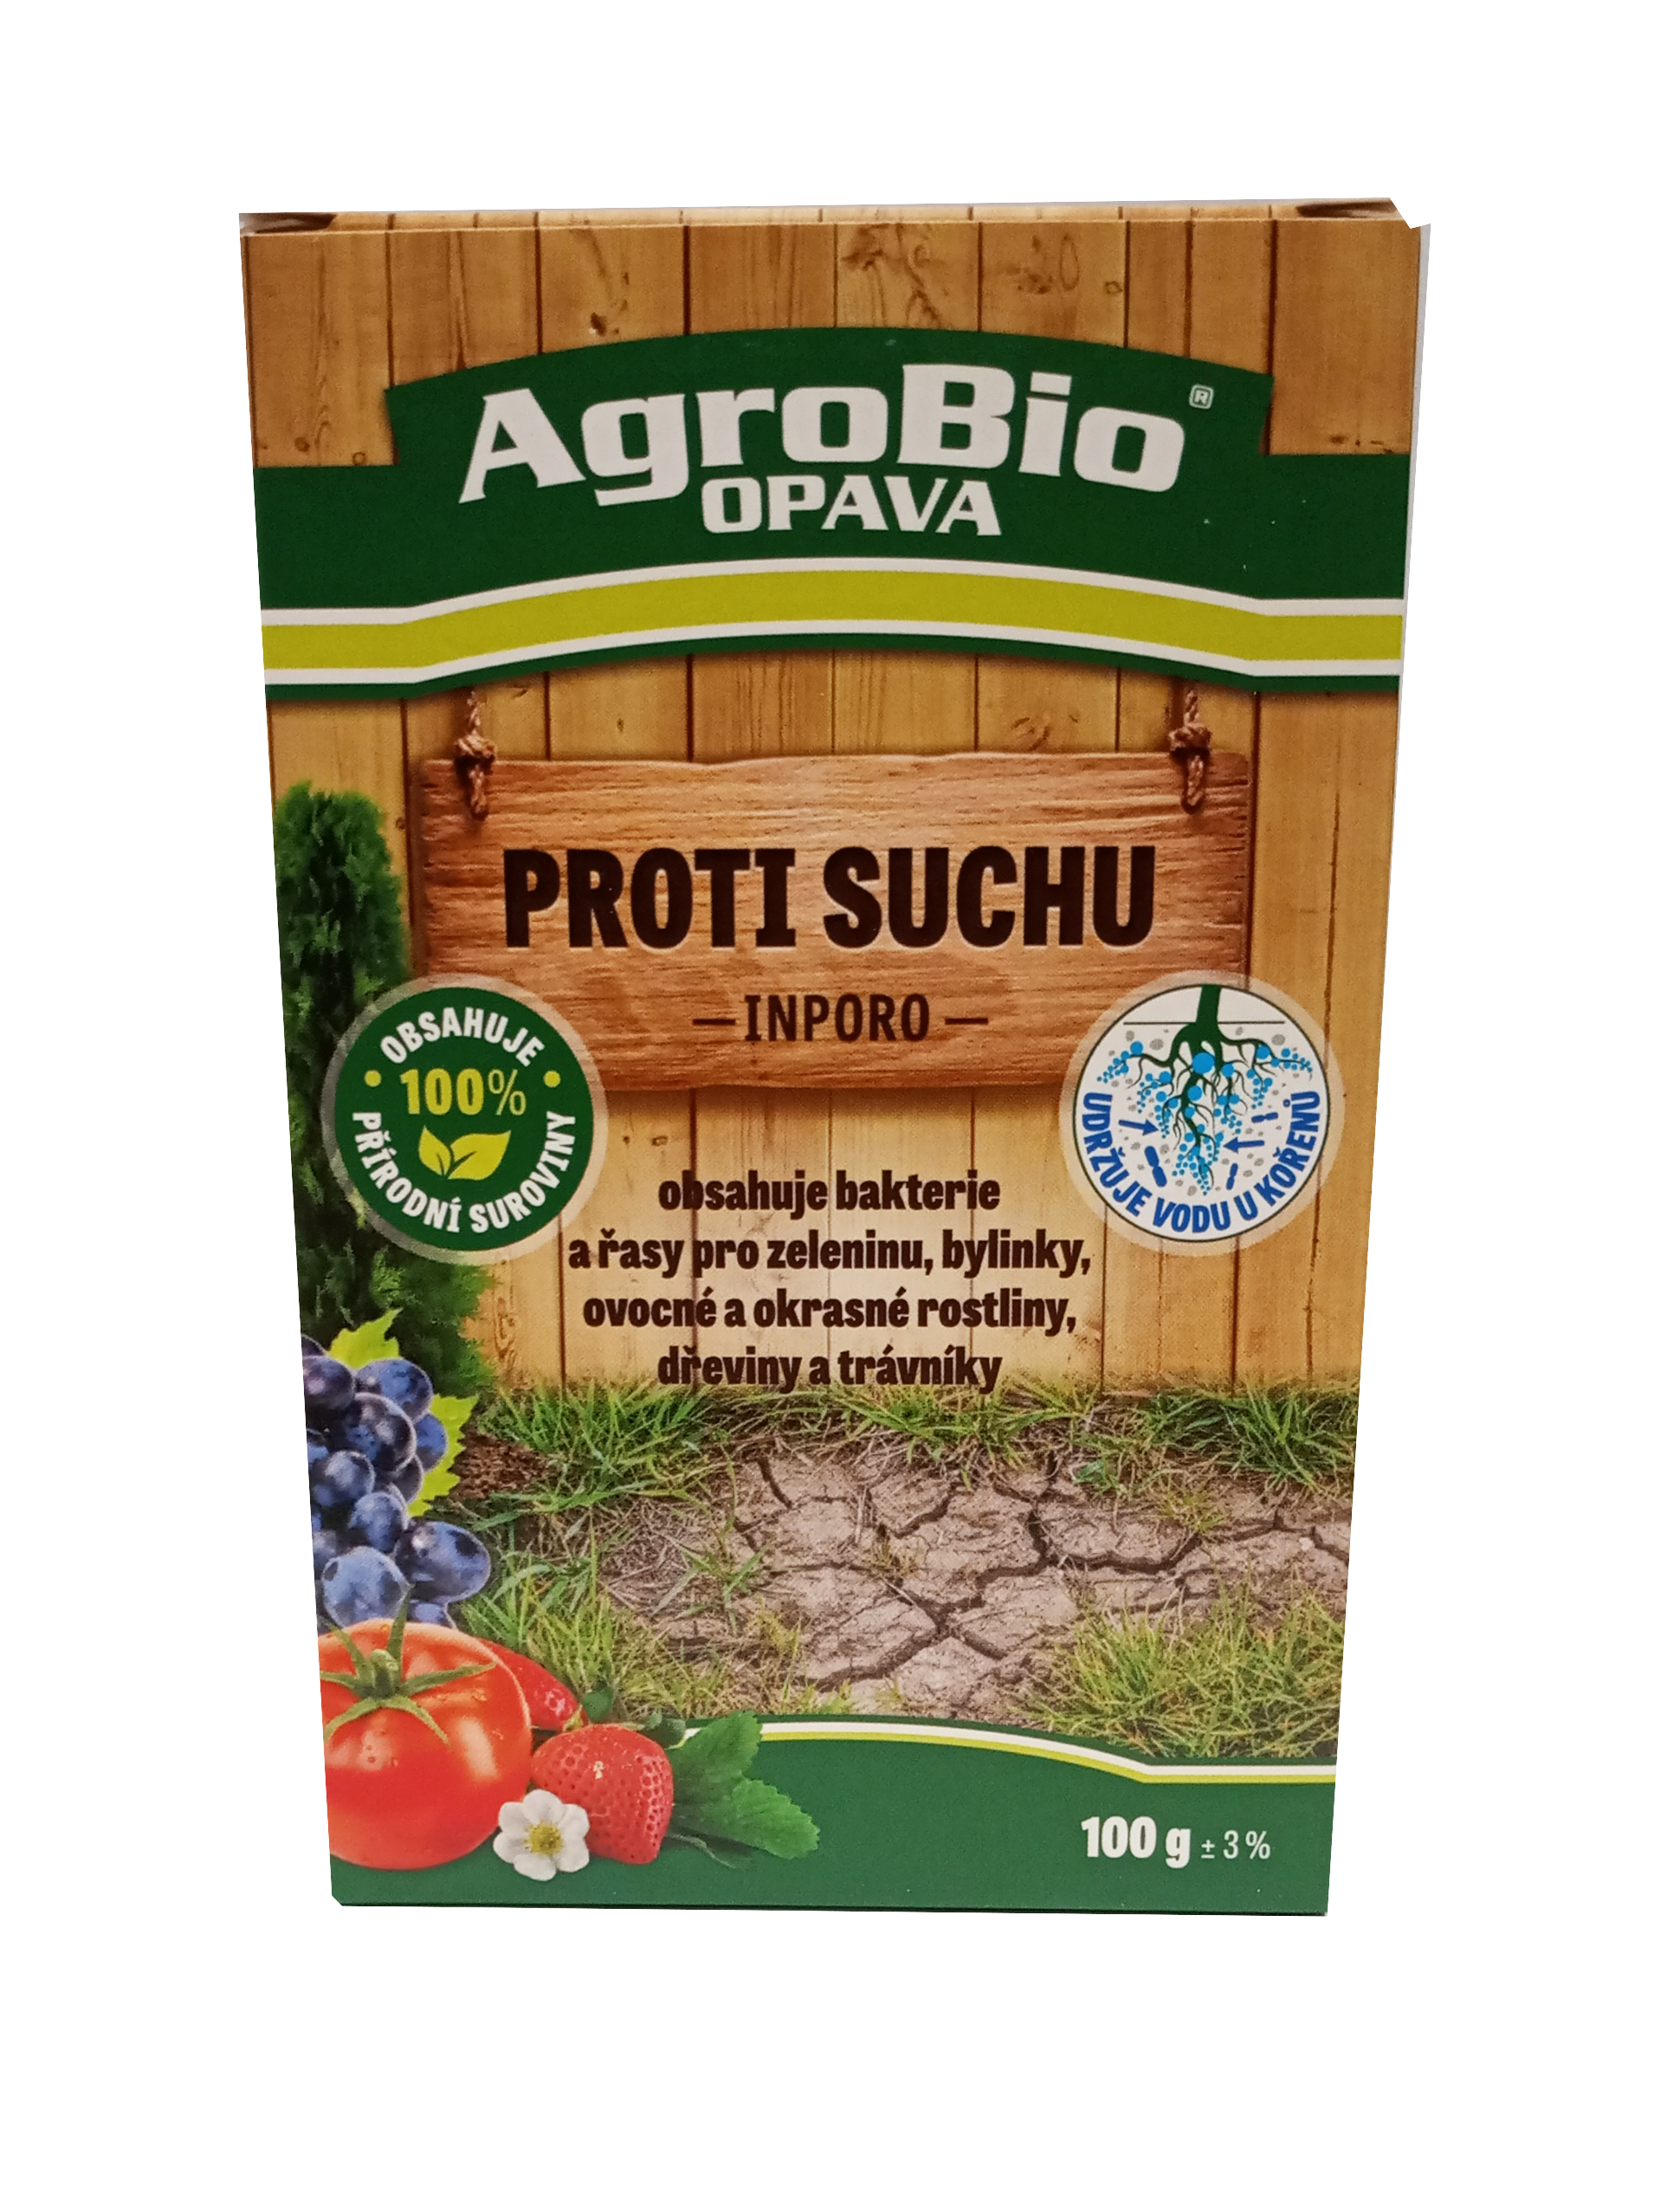 AgroBio Proti suchu 100g (INPORO)